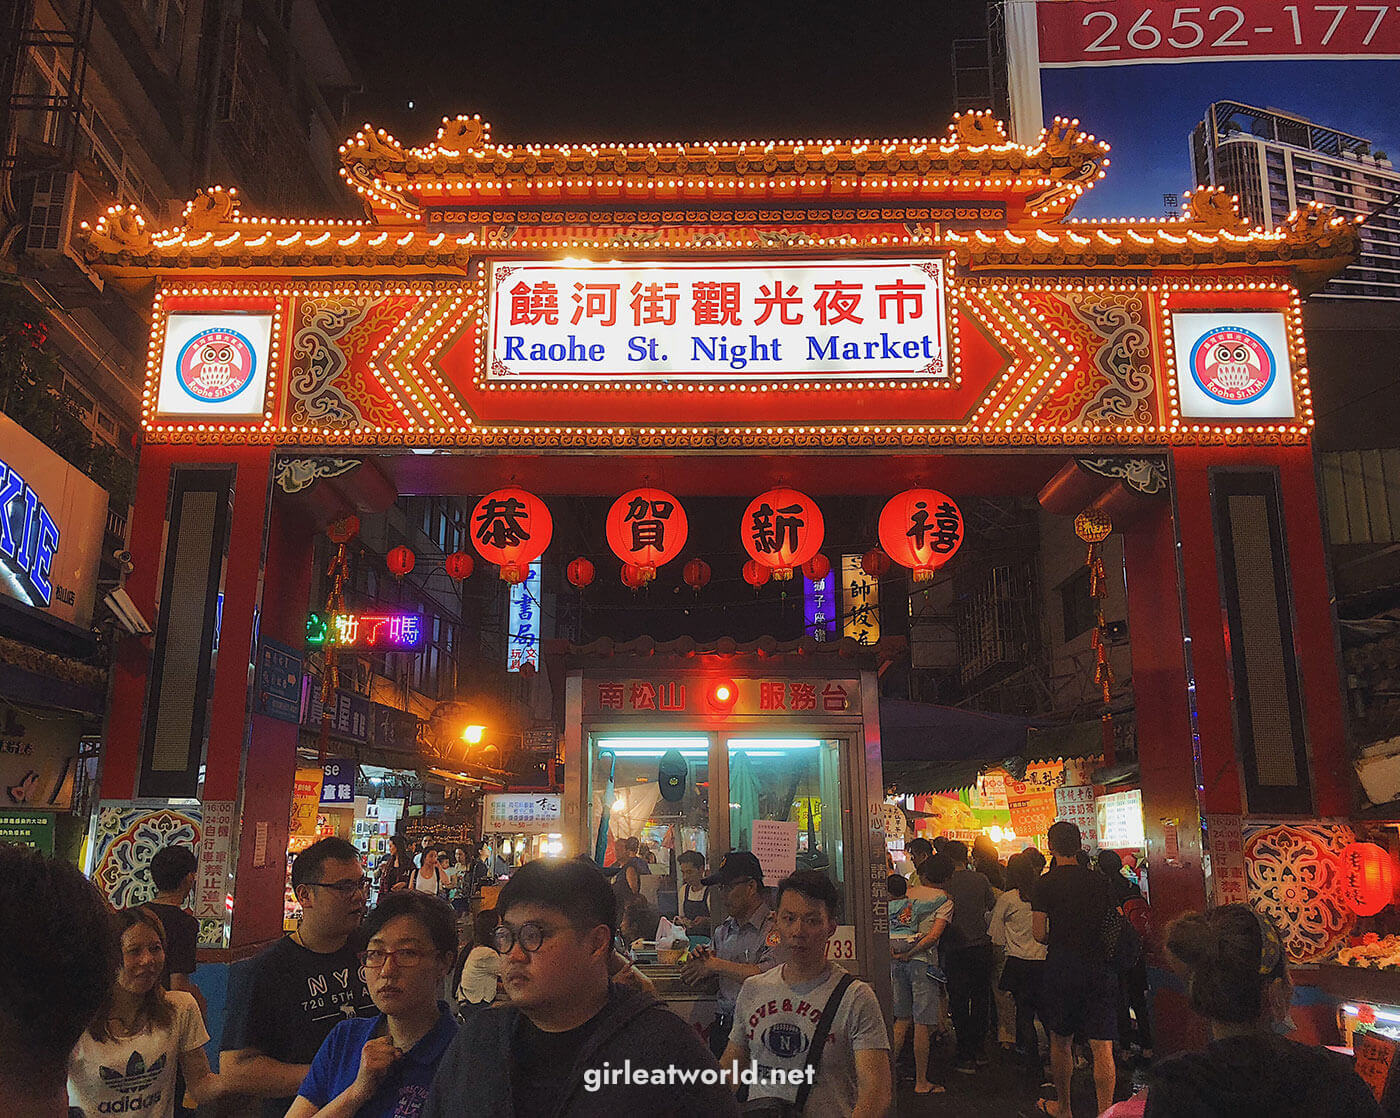 The South entrance of Raohe Night Market